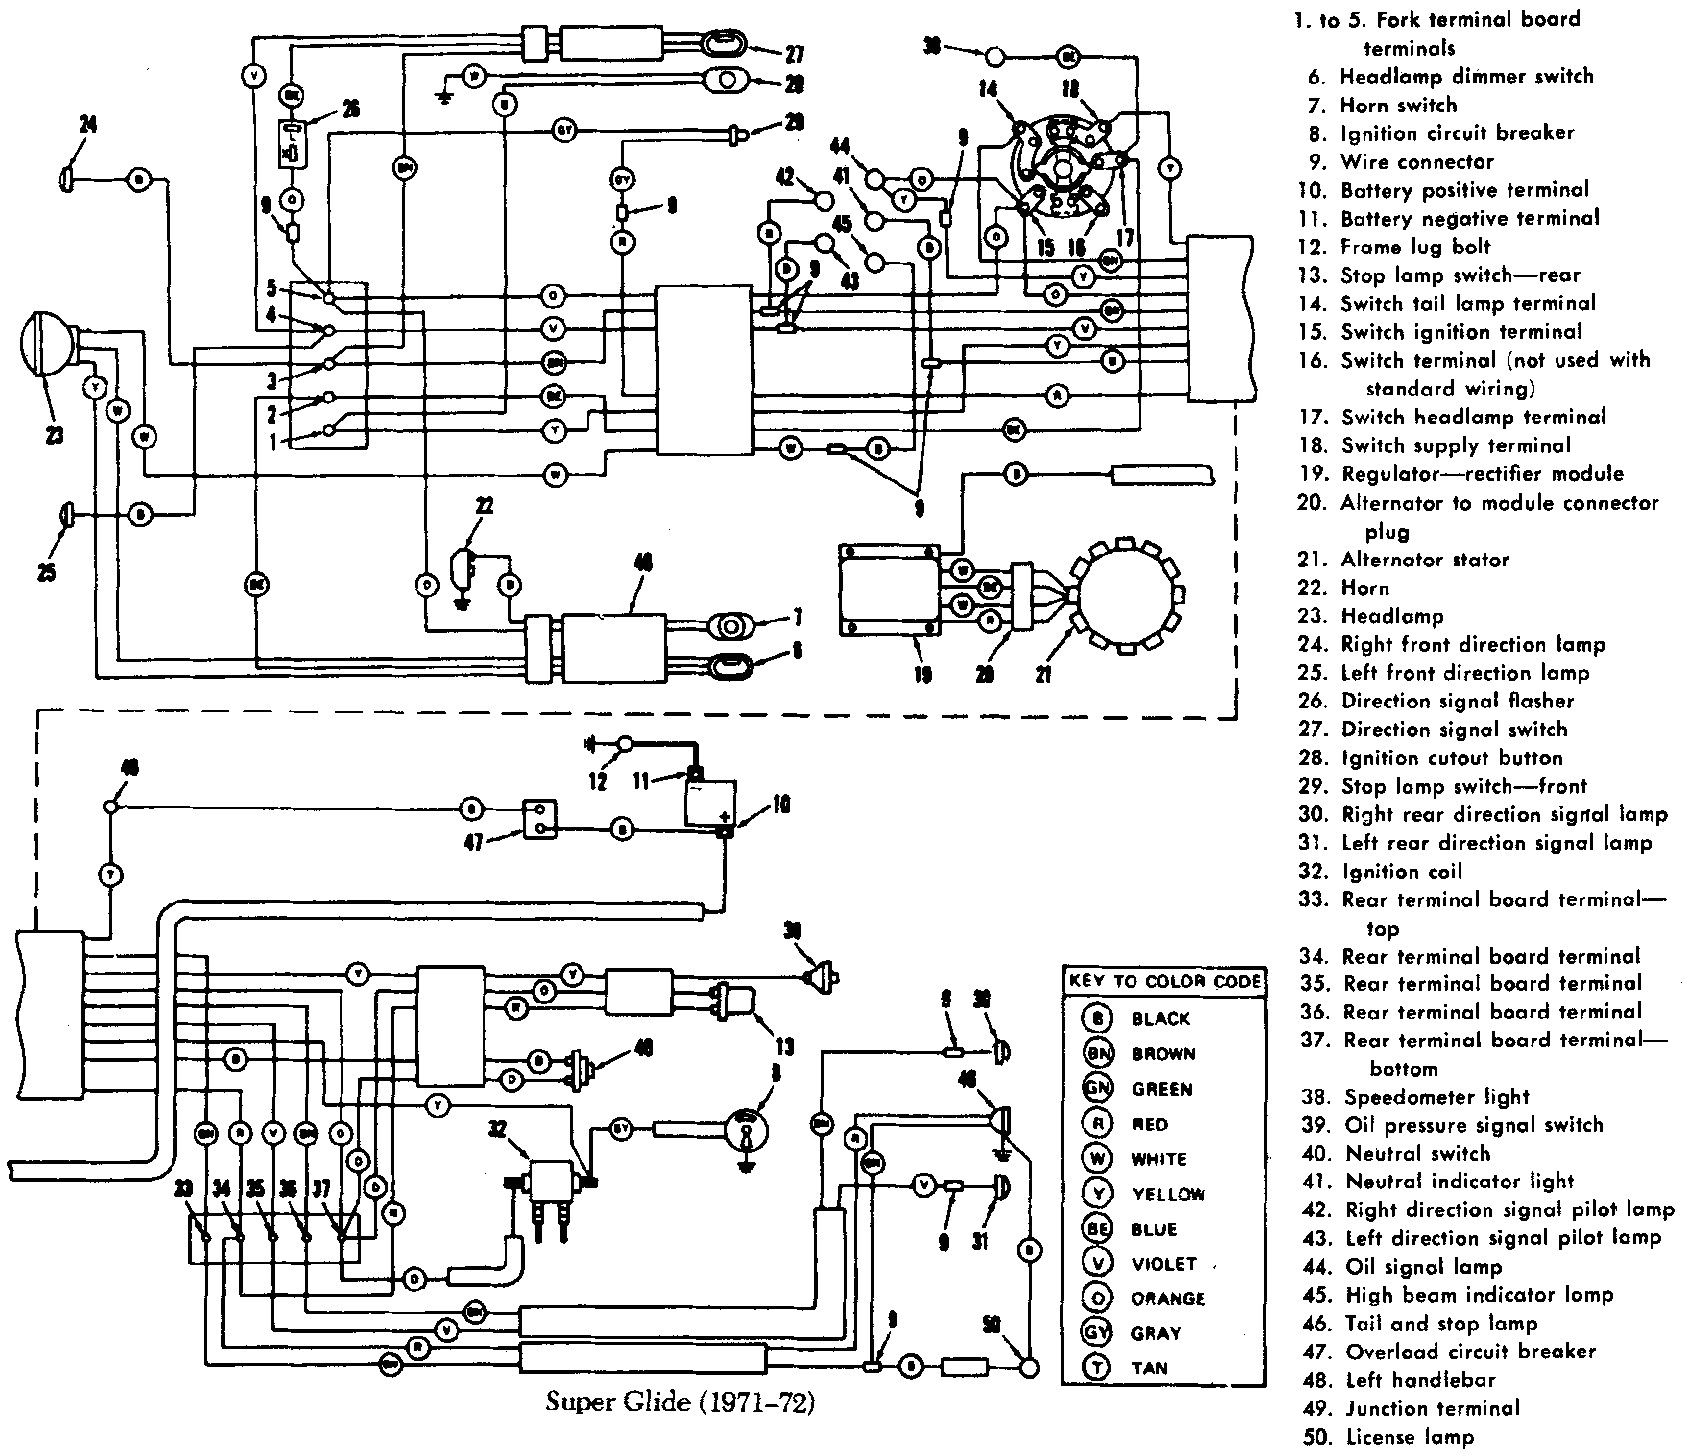 harley davidson headlight wiring diagram awesome fresh harley davidson ignition switch wiring diagram diagram of harley davidson headlight wiring diagram jpg